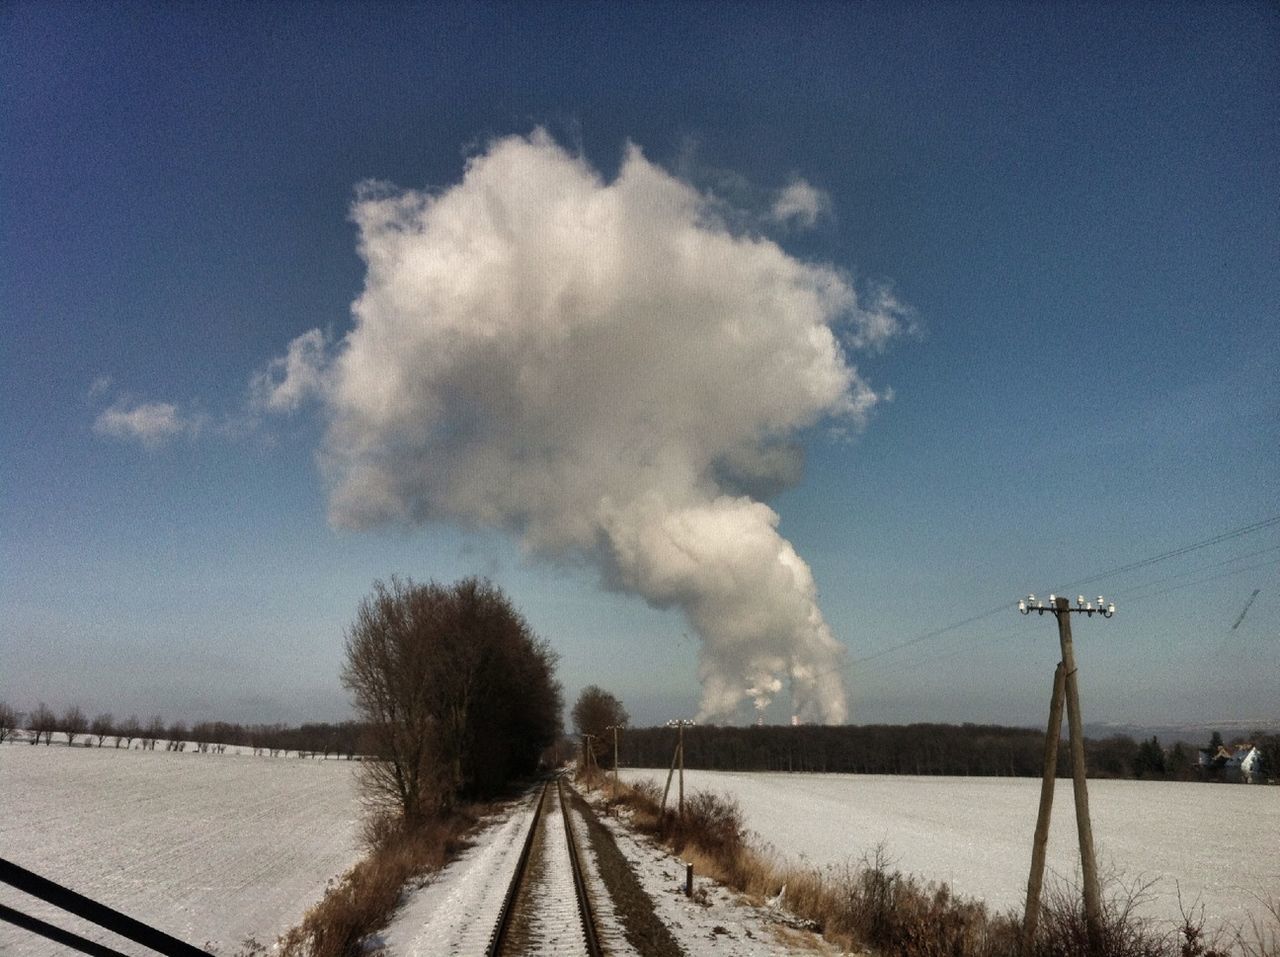 Factories emitting smoke seen through train windshield